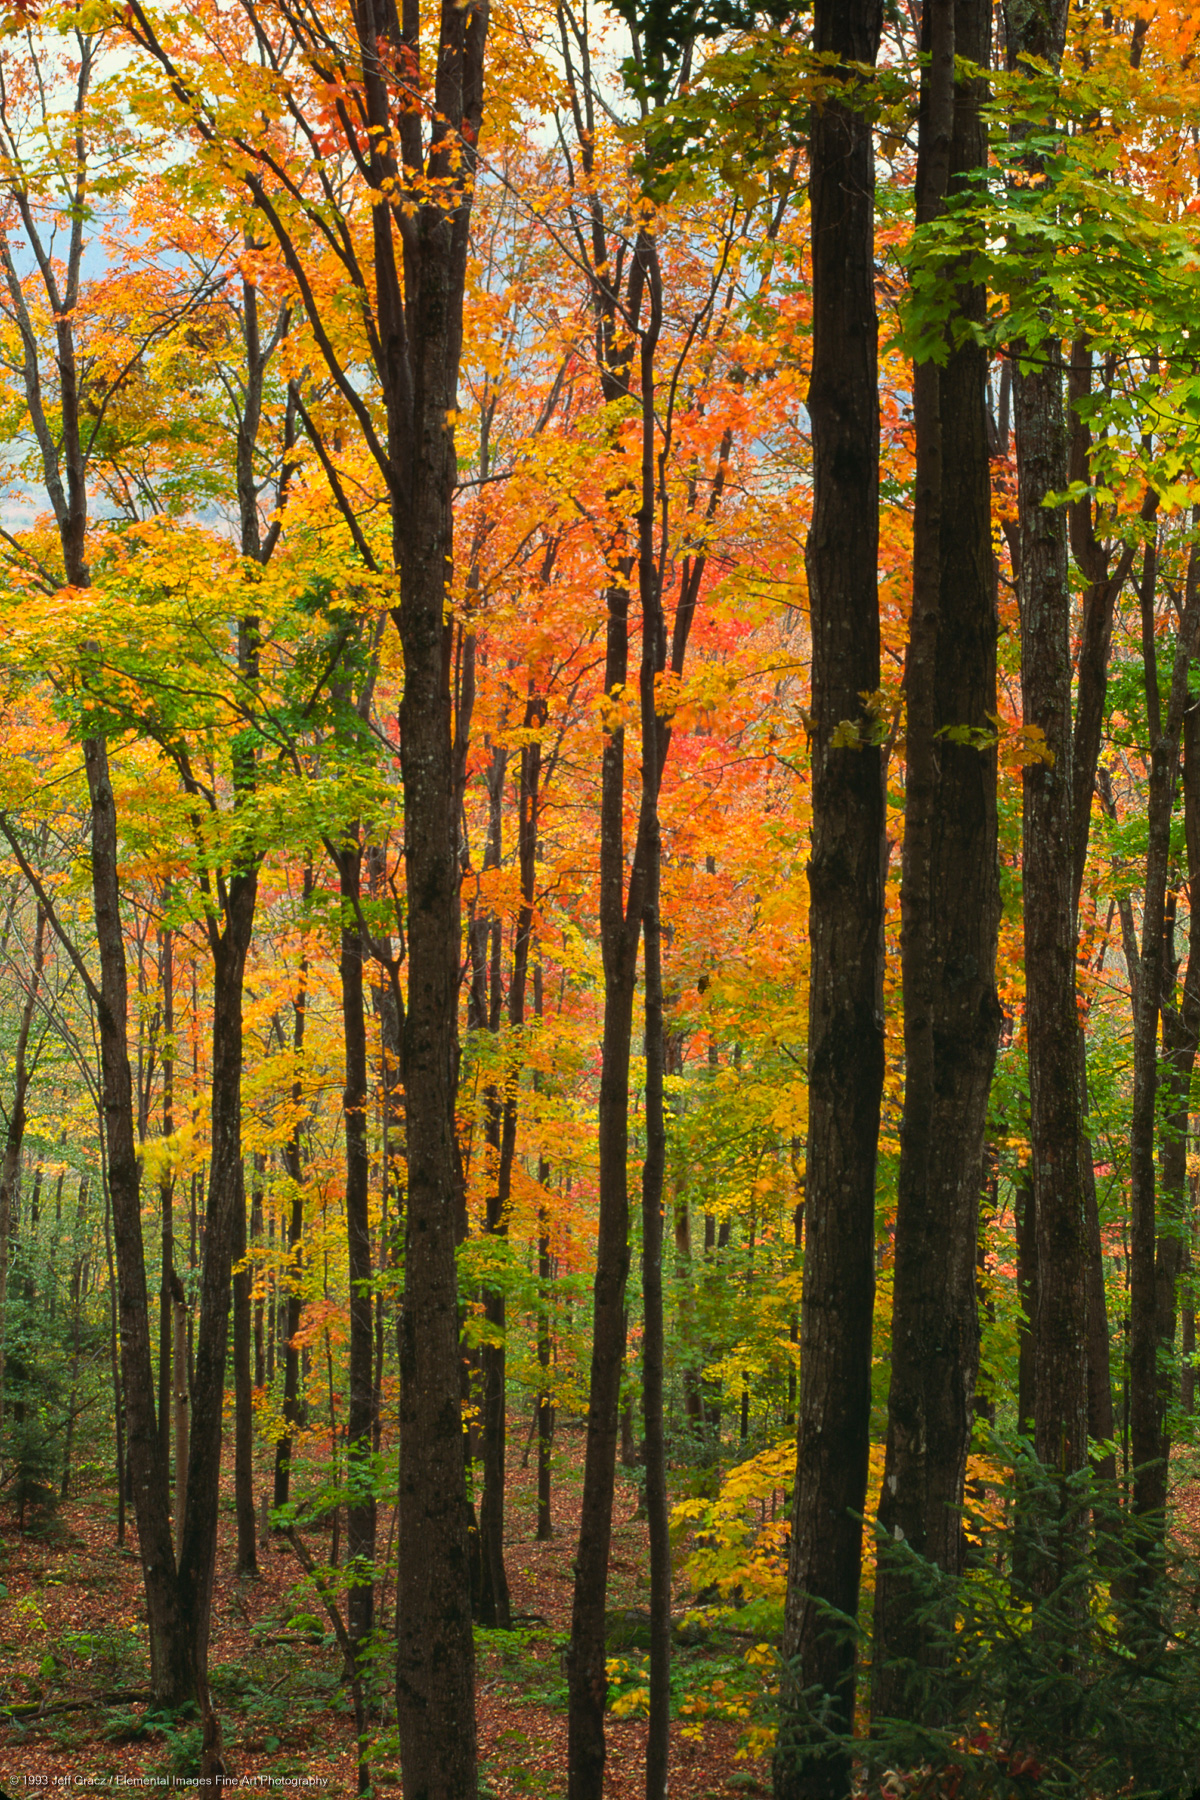 autumn foliage, tree trunks, near john's brook | adirondack state park | NY | usa - © © 1993 Jeff Gracz / Elemental Images Fine Art Photography - All Rights Reserved Worldwide